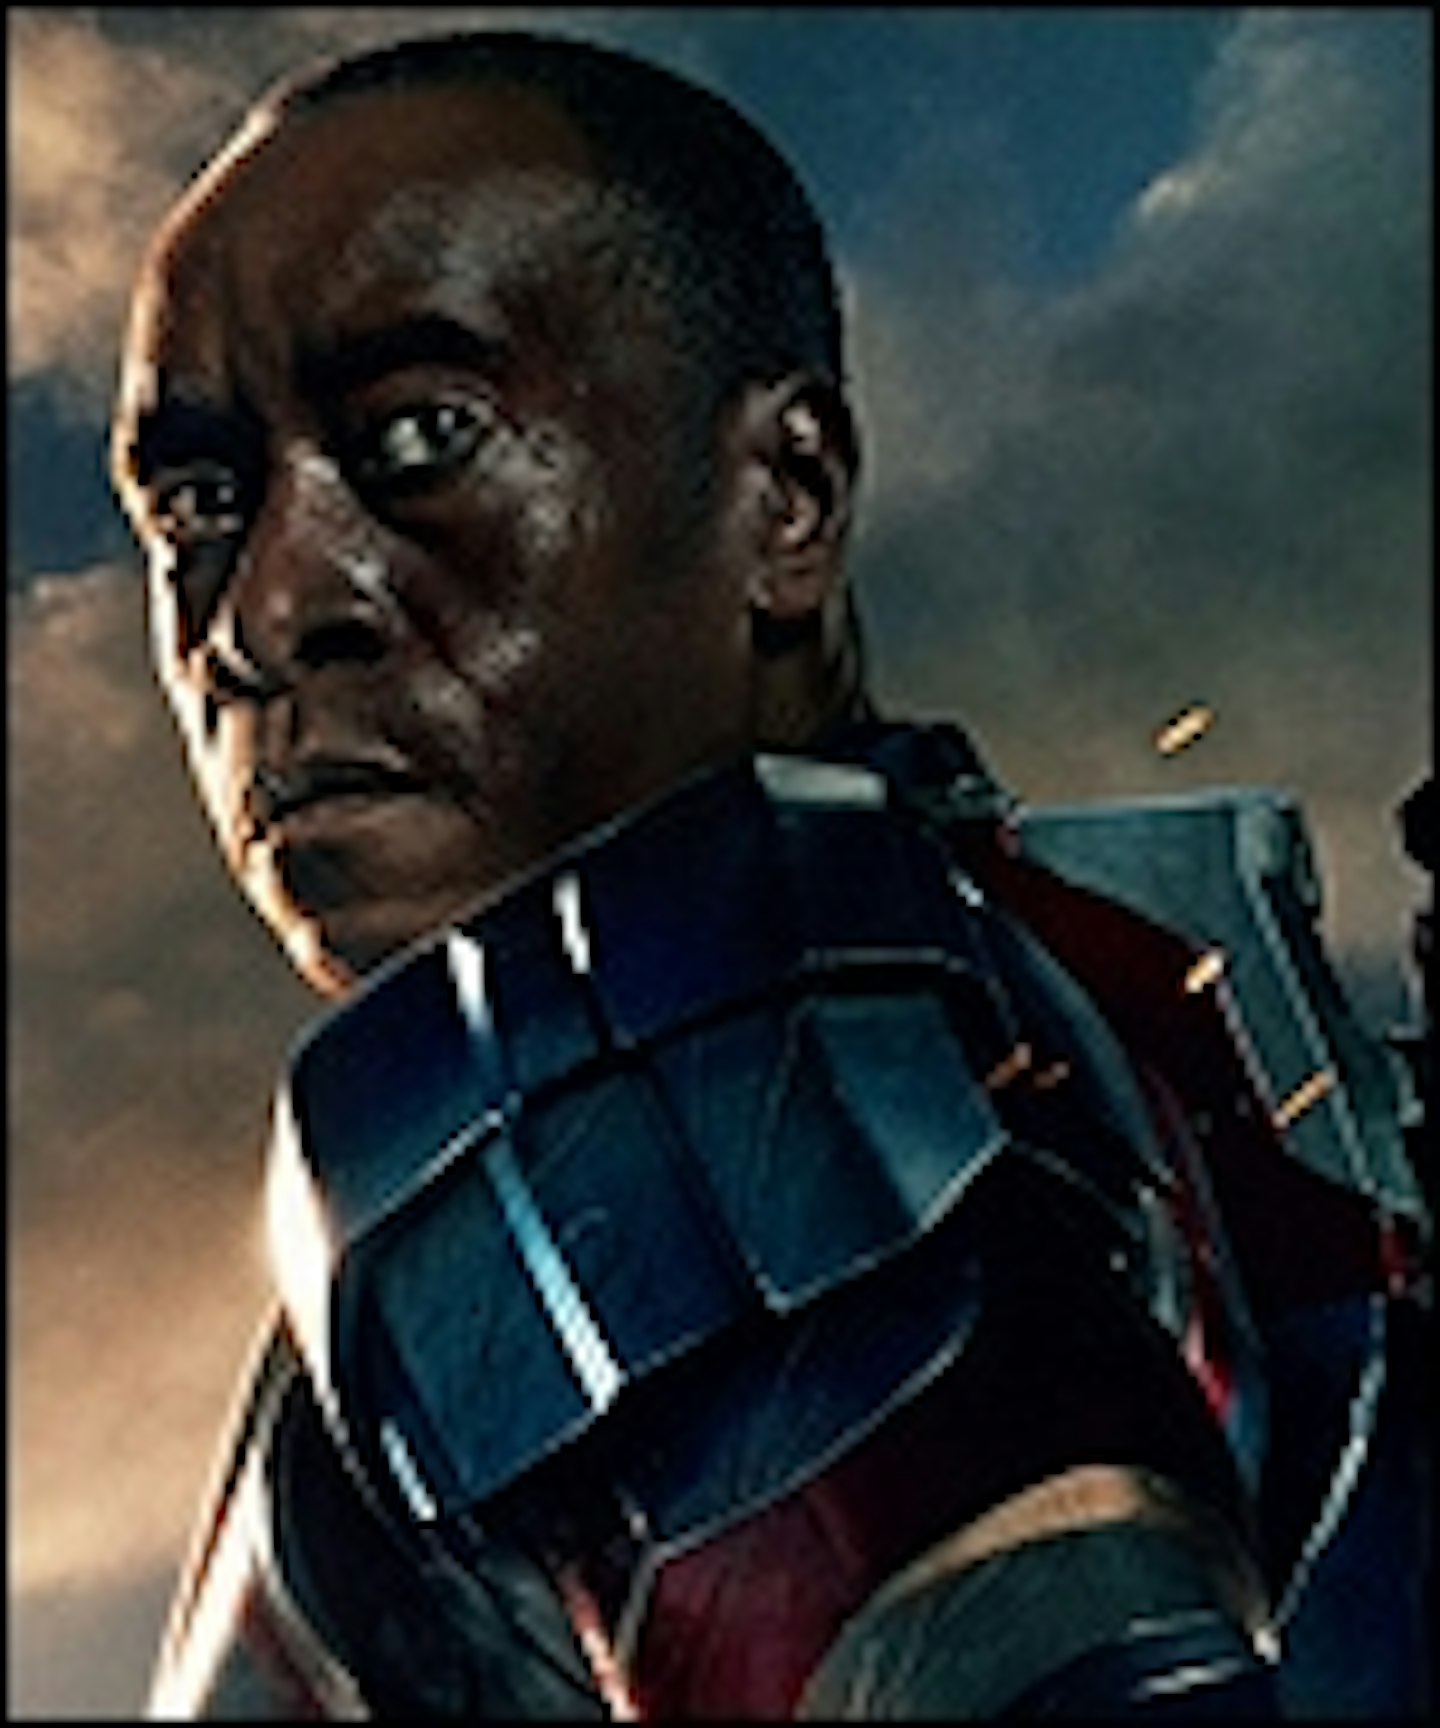 New Iron Man 3 Iron Patriot Poster Lands